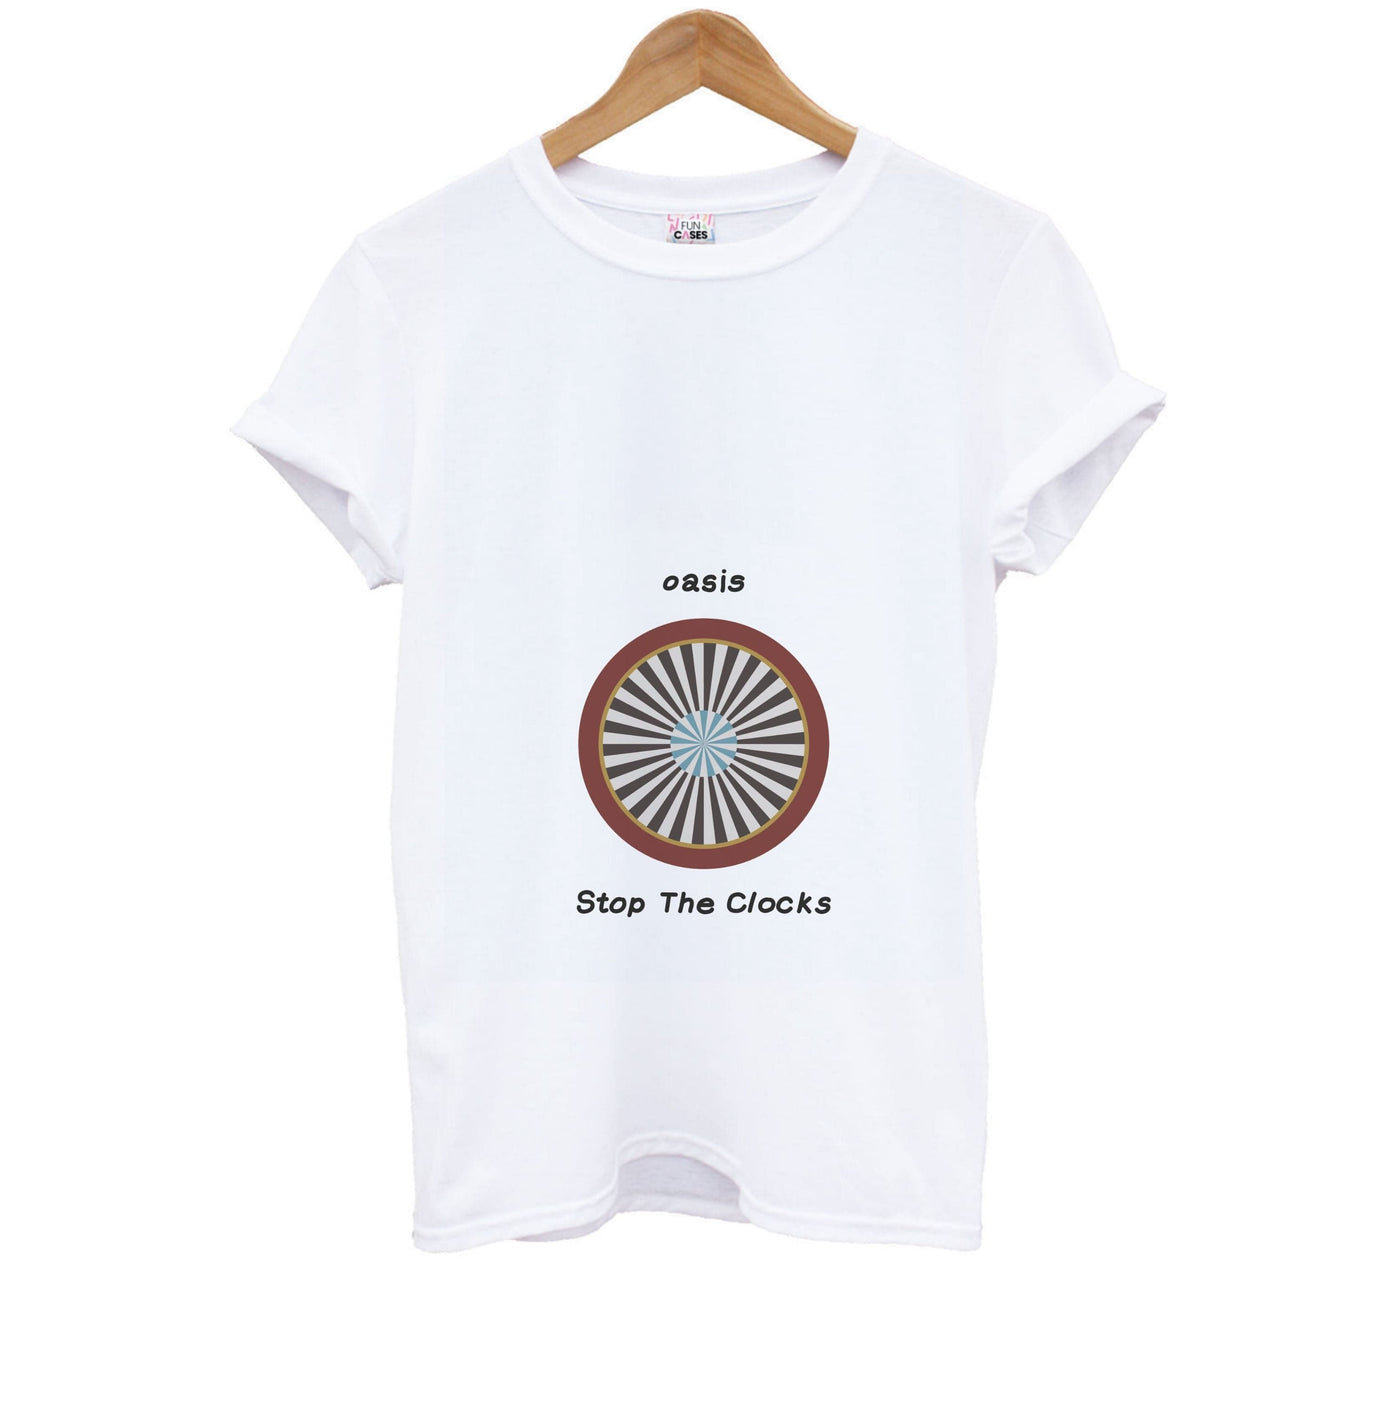 Stop The Clocks - Oasis Kids T-Shirt